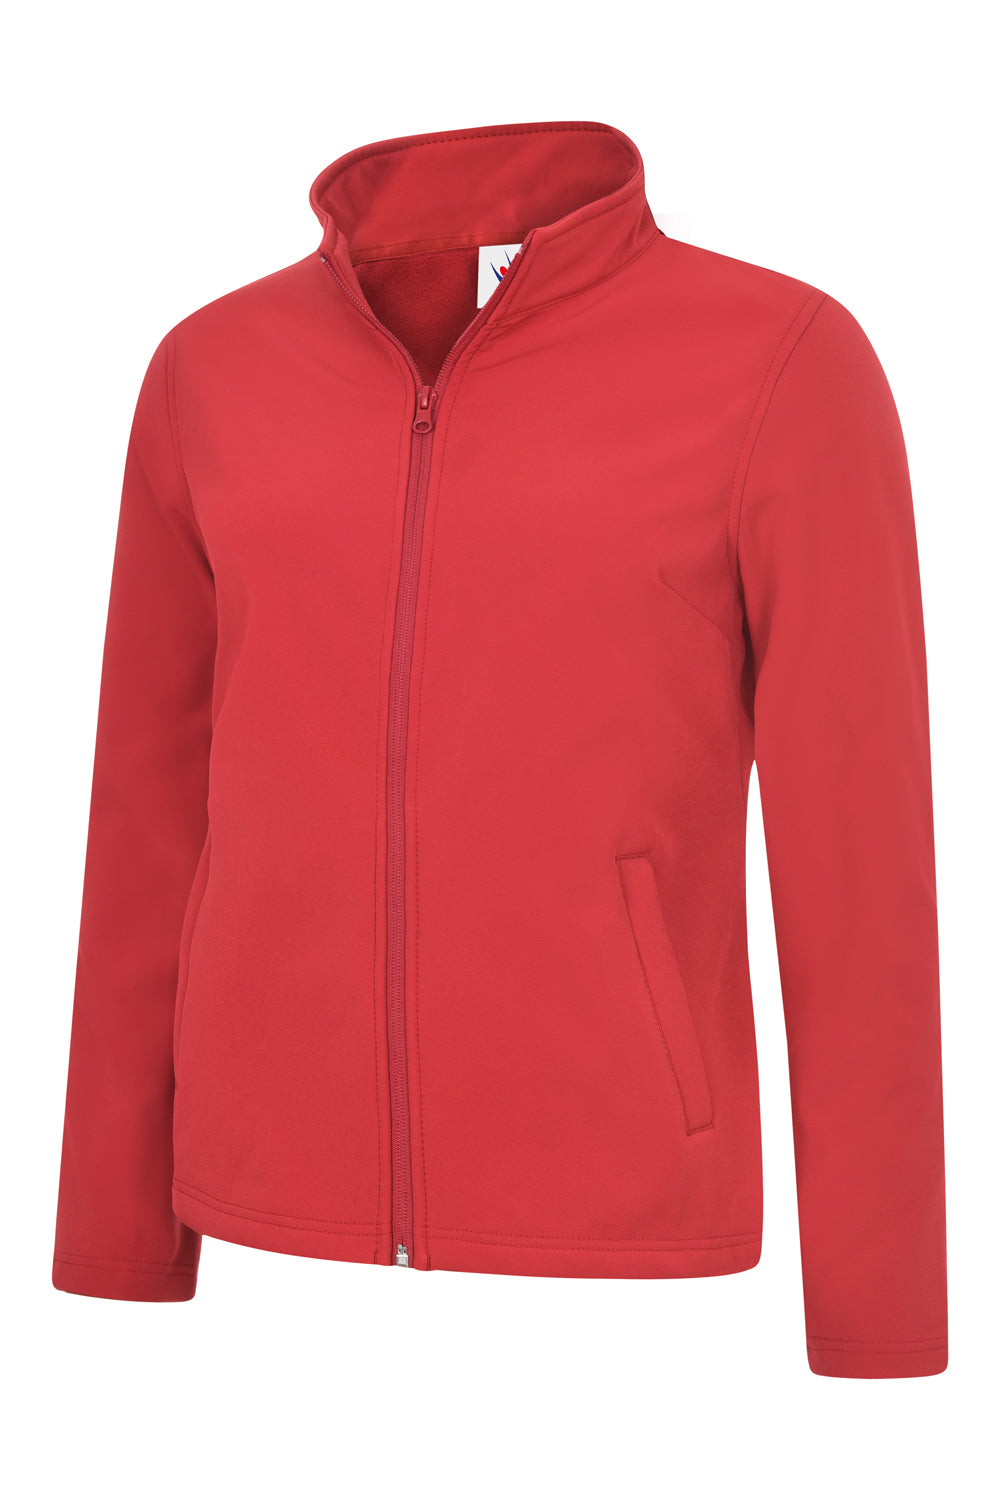 Uneek Ladies Classic Full Zip Soft Shell Jacket UC613 - Red